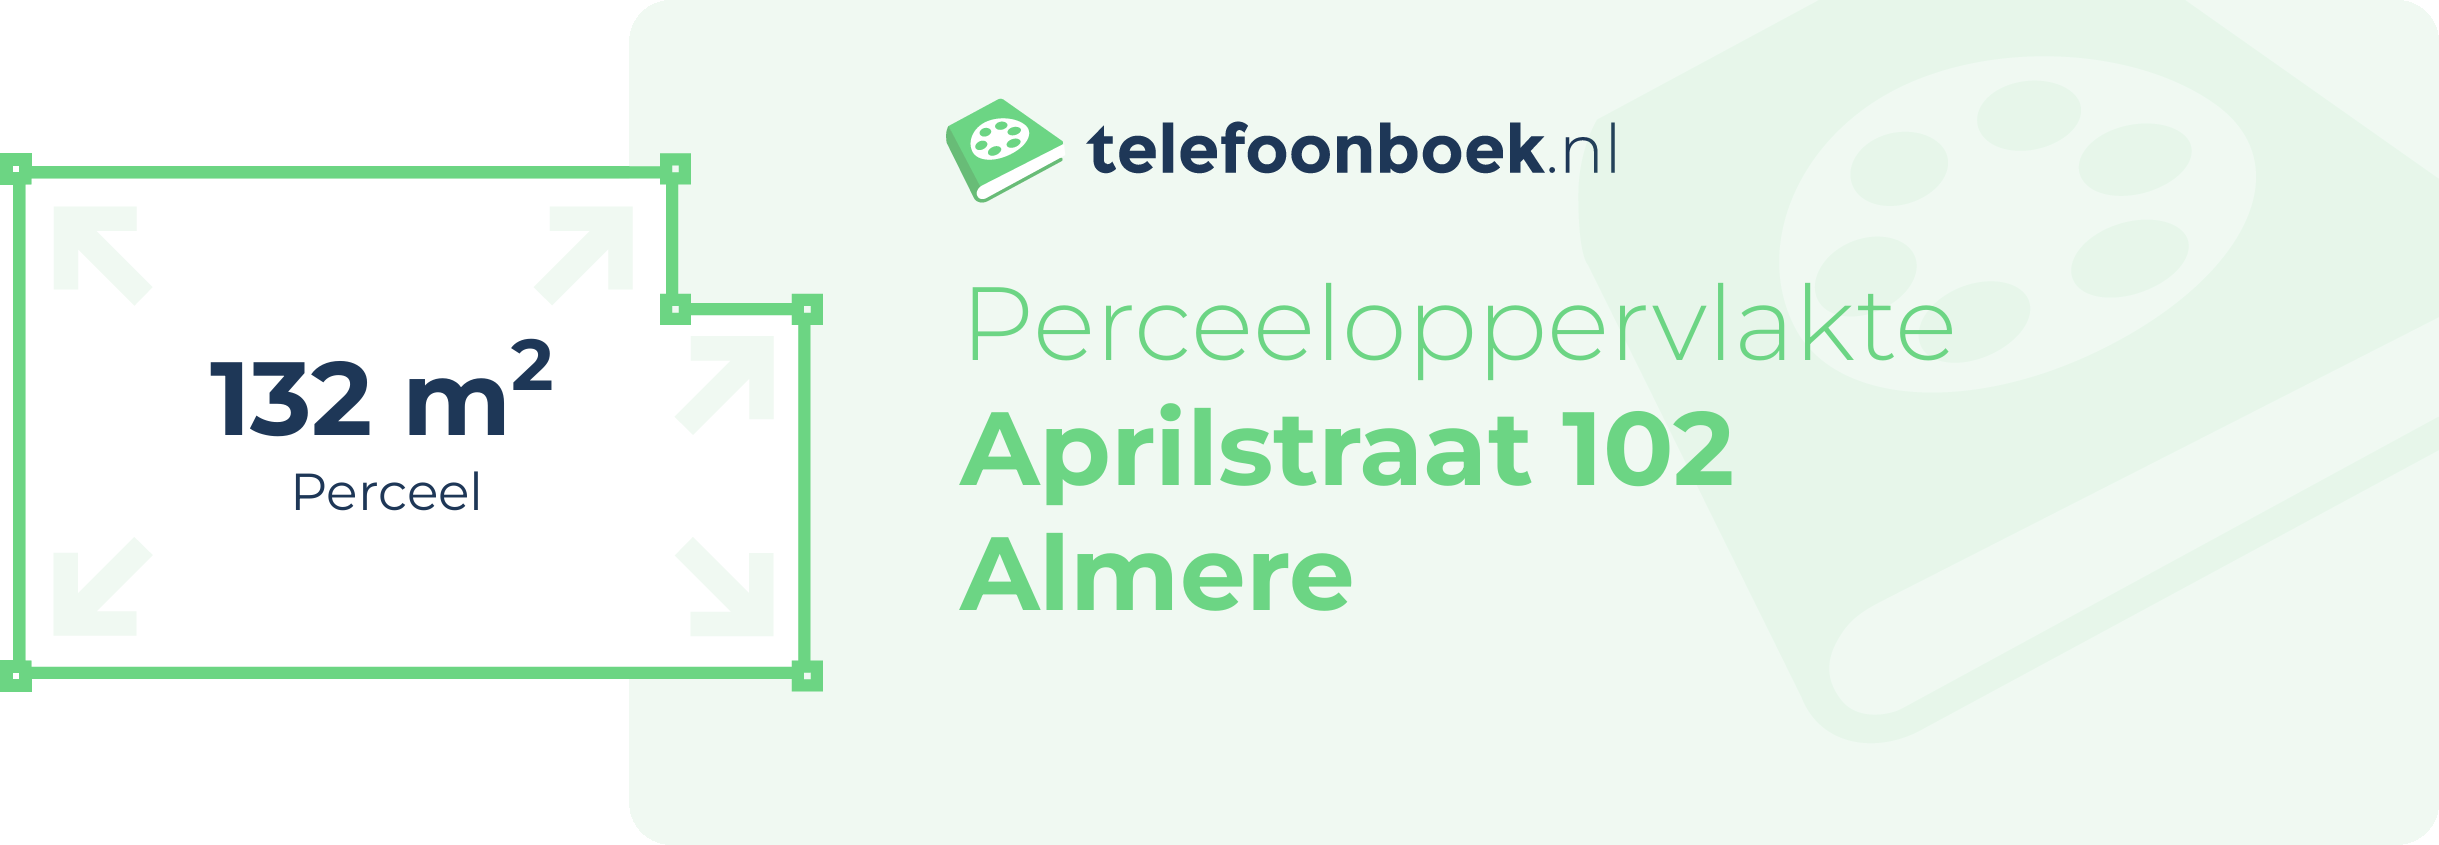 Perceeloppervlakte Aprilstraat 102 Almere